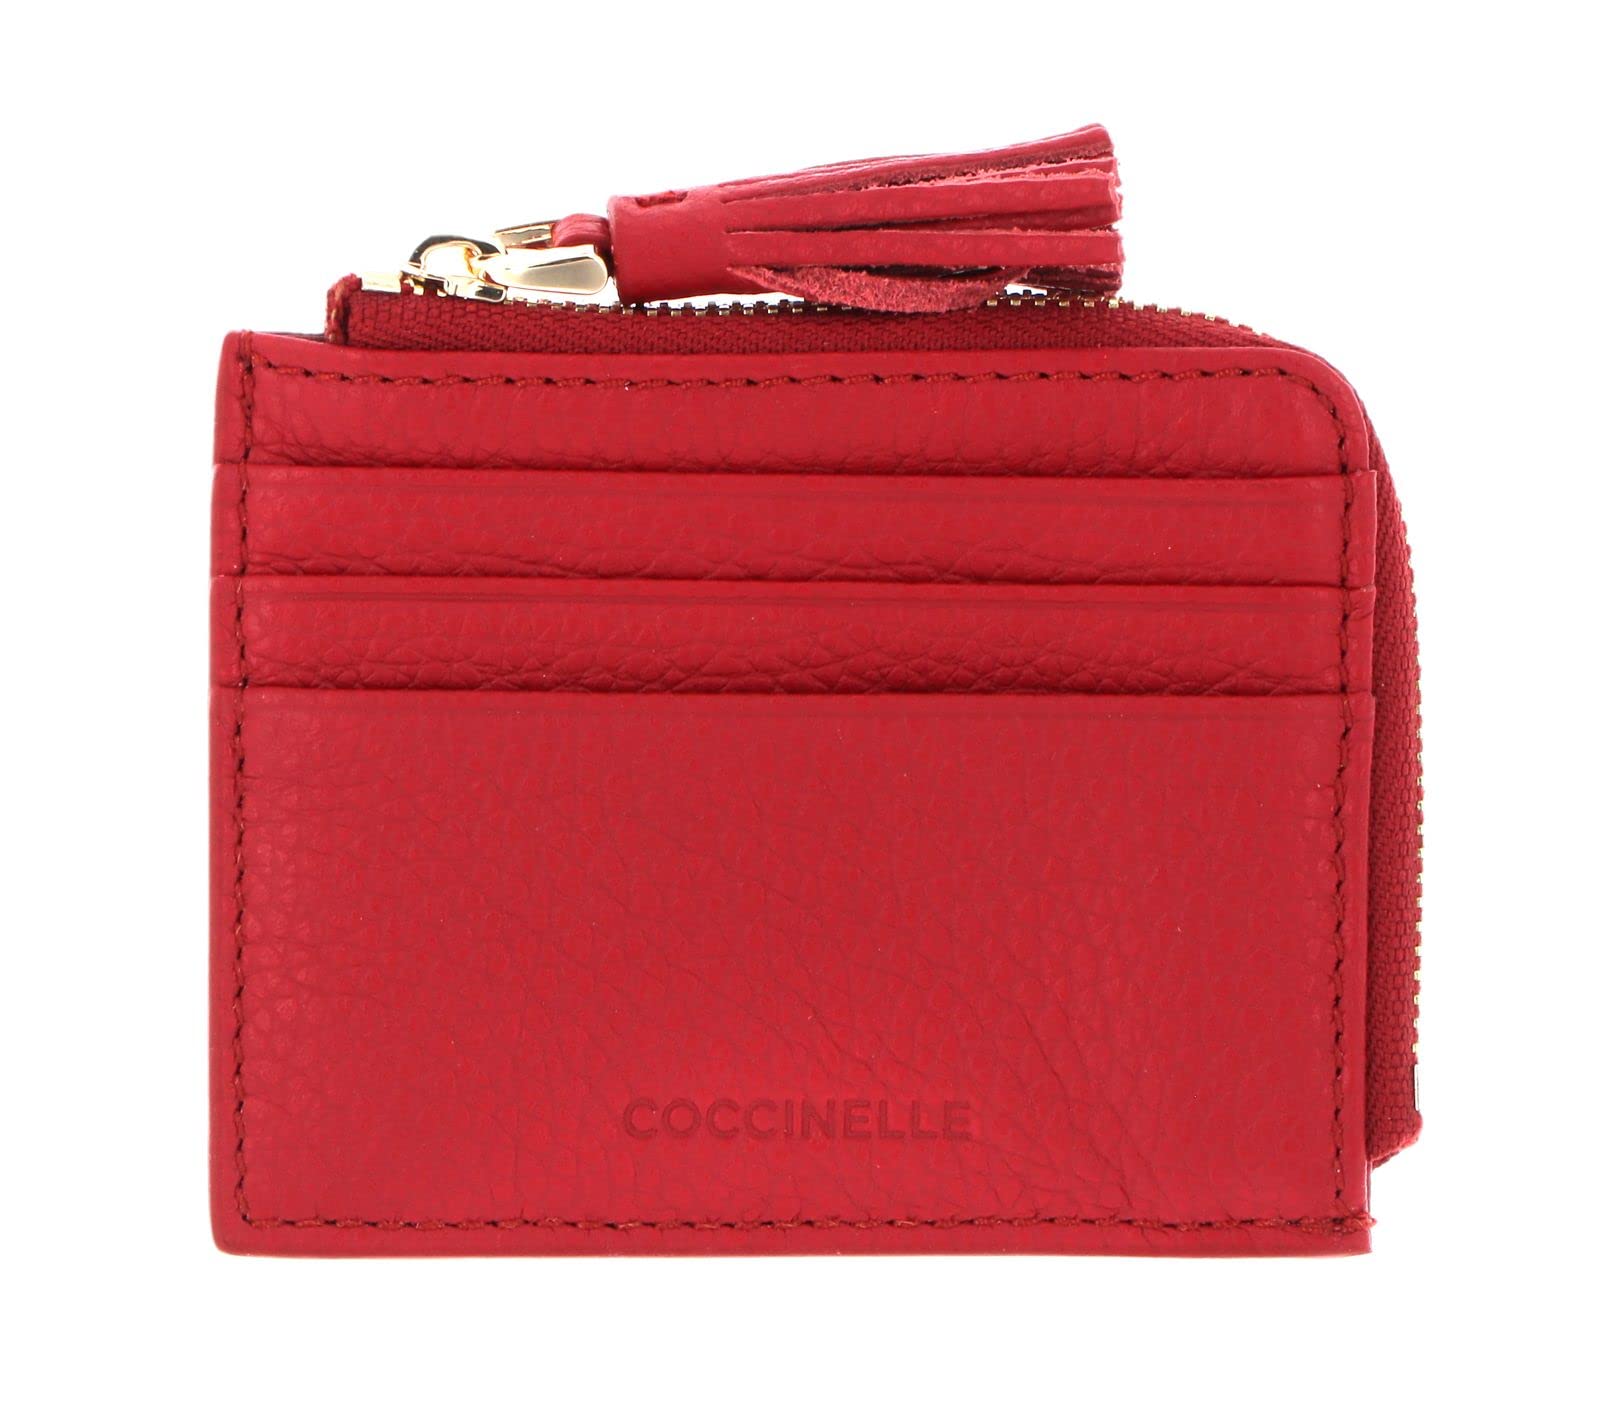 COCCINELLE Tassel Credit Card Holder Ruby